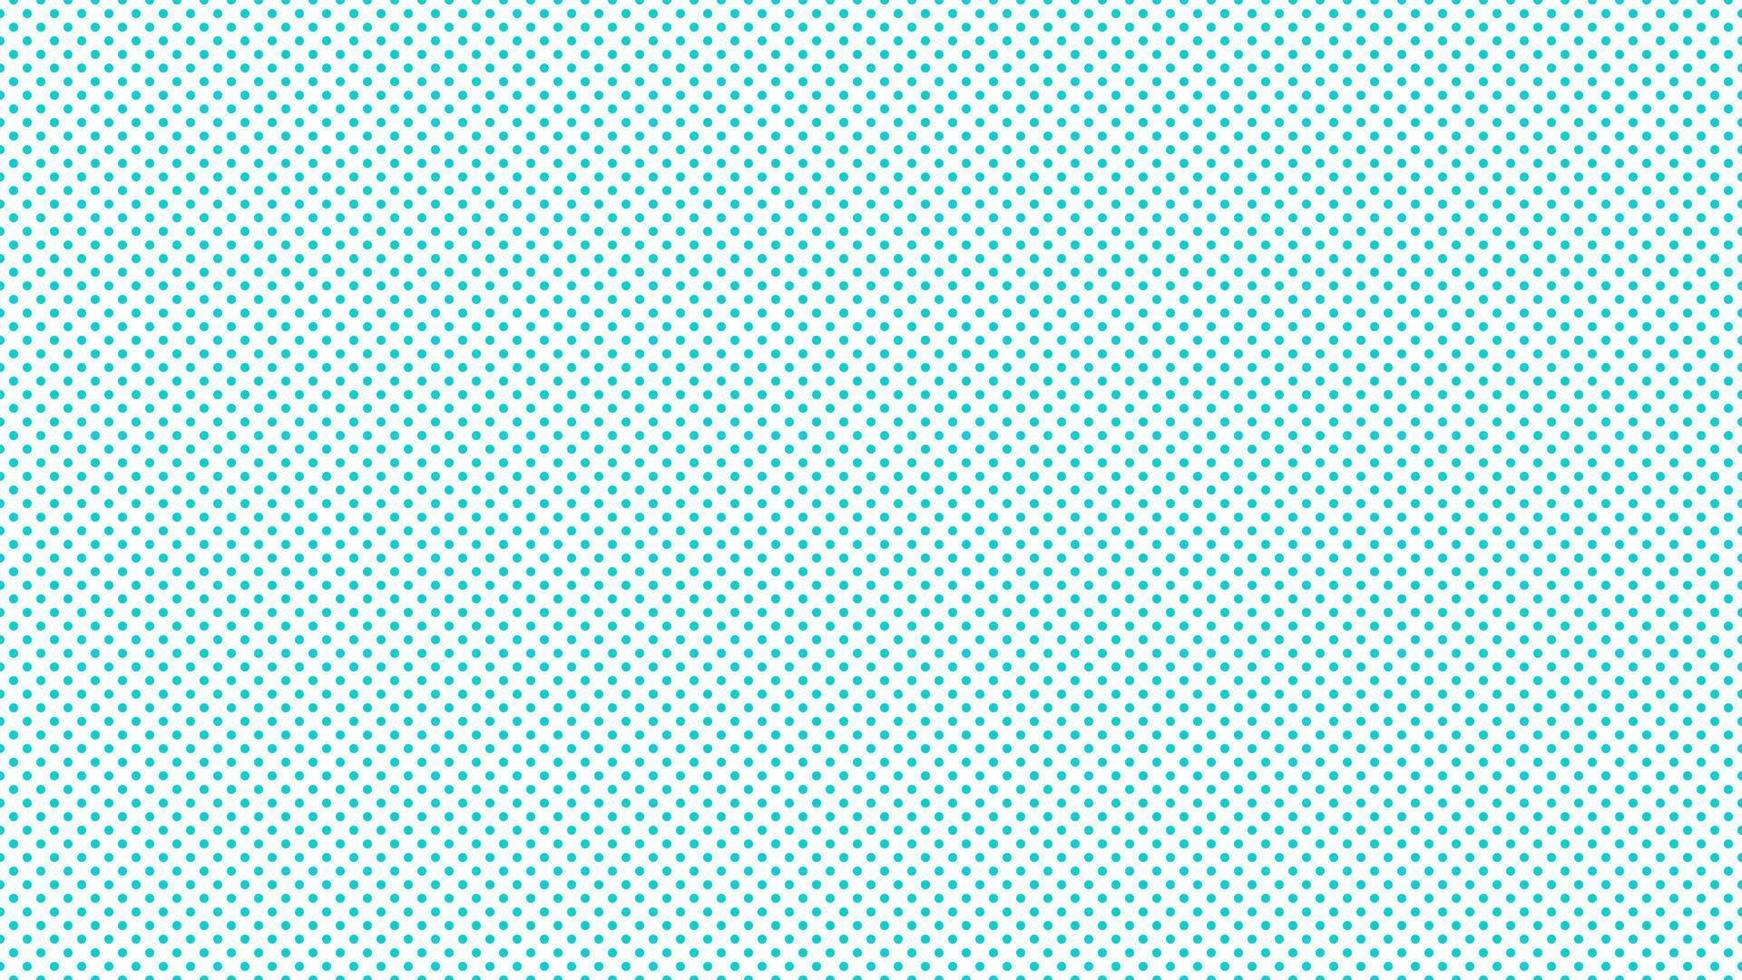 donker turkoois cyaan kleur polka dots achtergrond vector